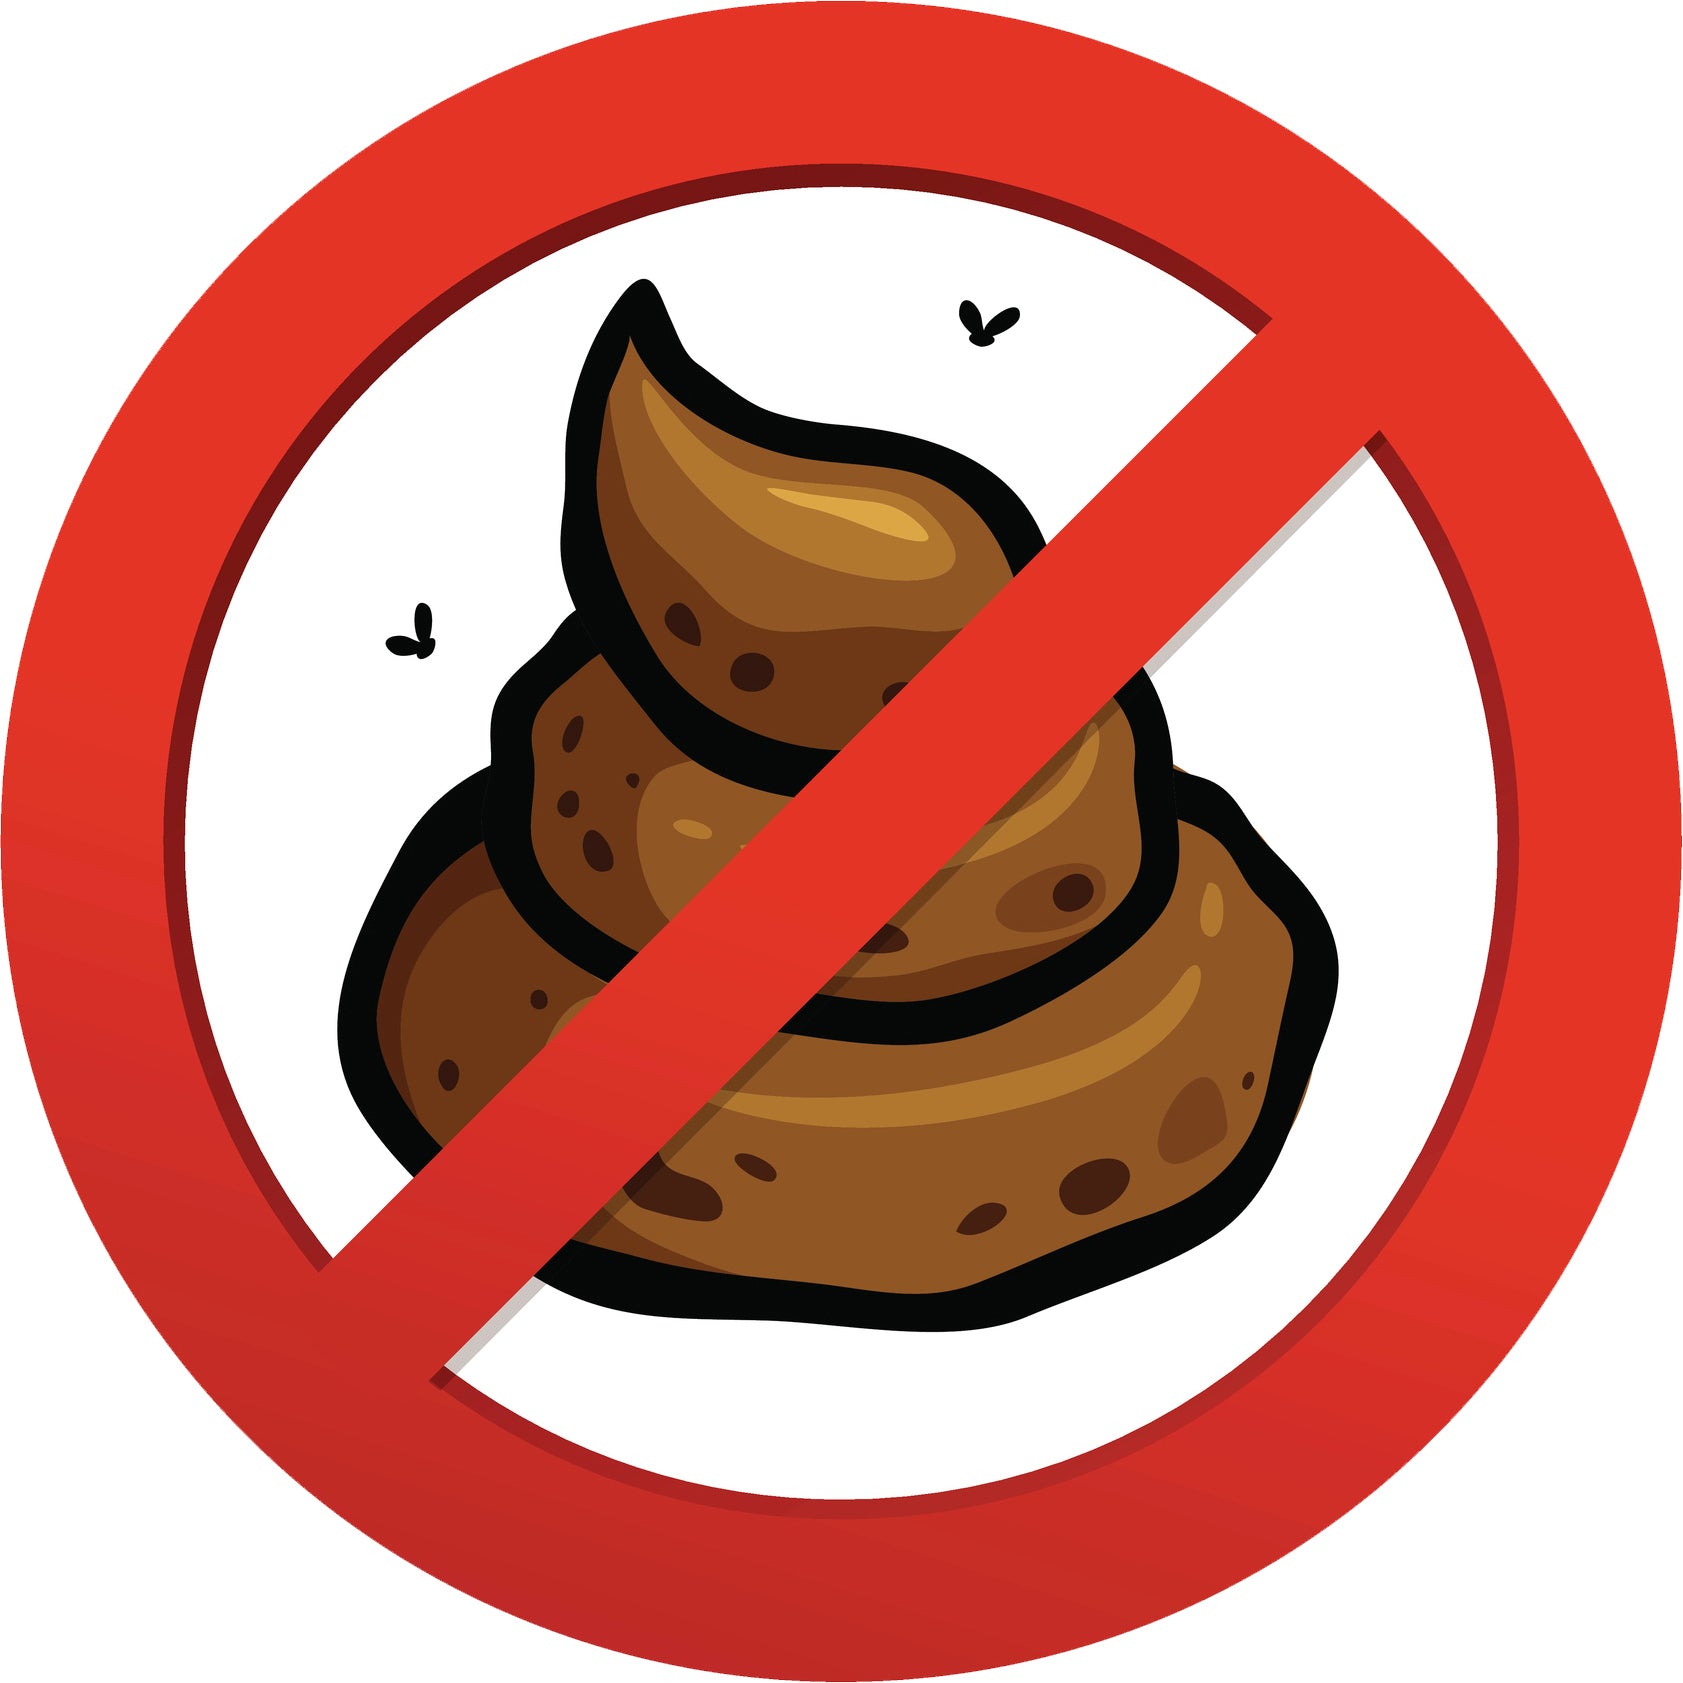 Retro Anti Poop Stink Emoji Sign Cartoon Vinyl Decal Sticker